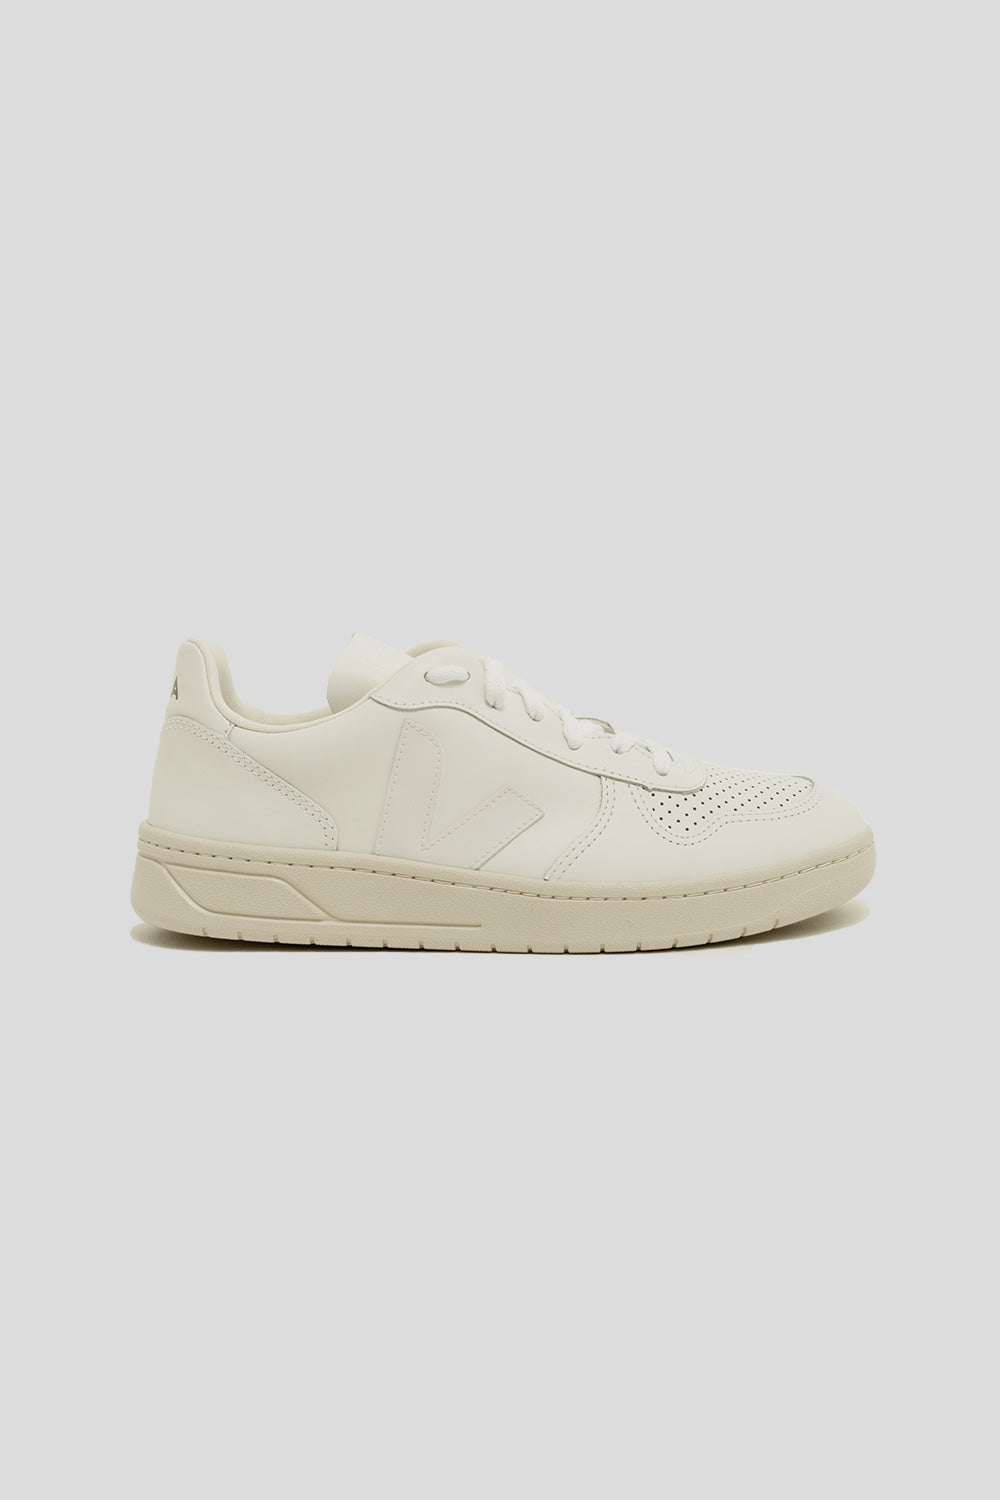 Veja Women&#39;s V-10 Leather Shoe in White/White